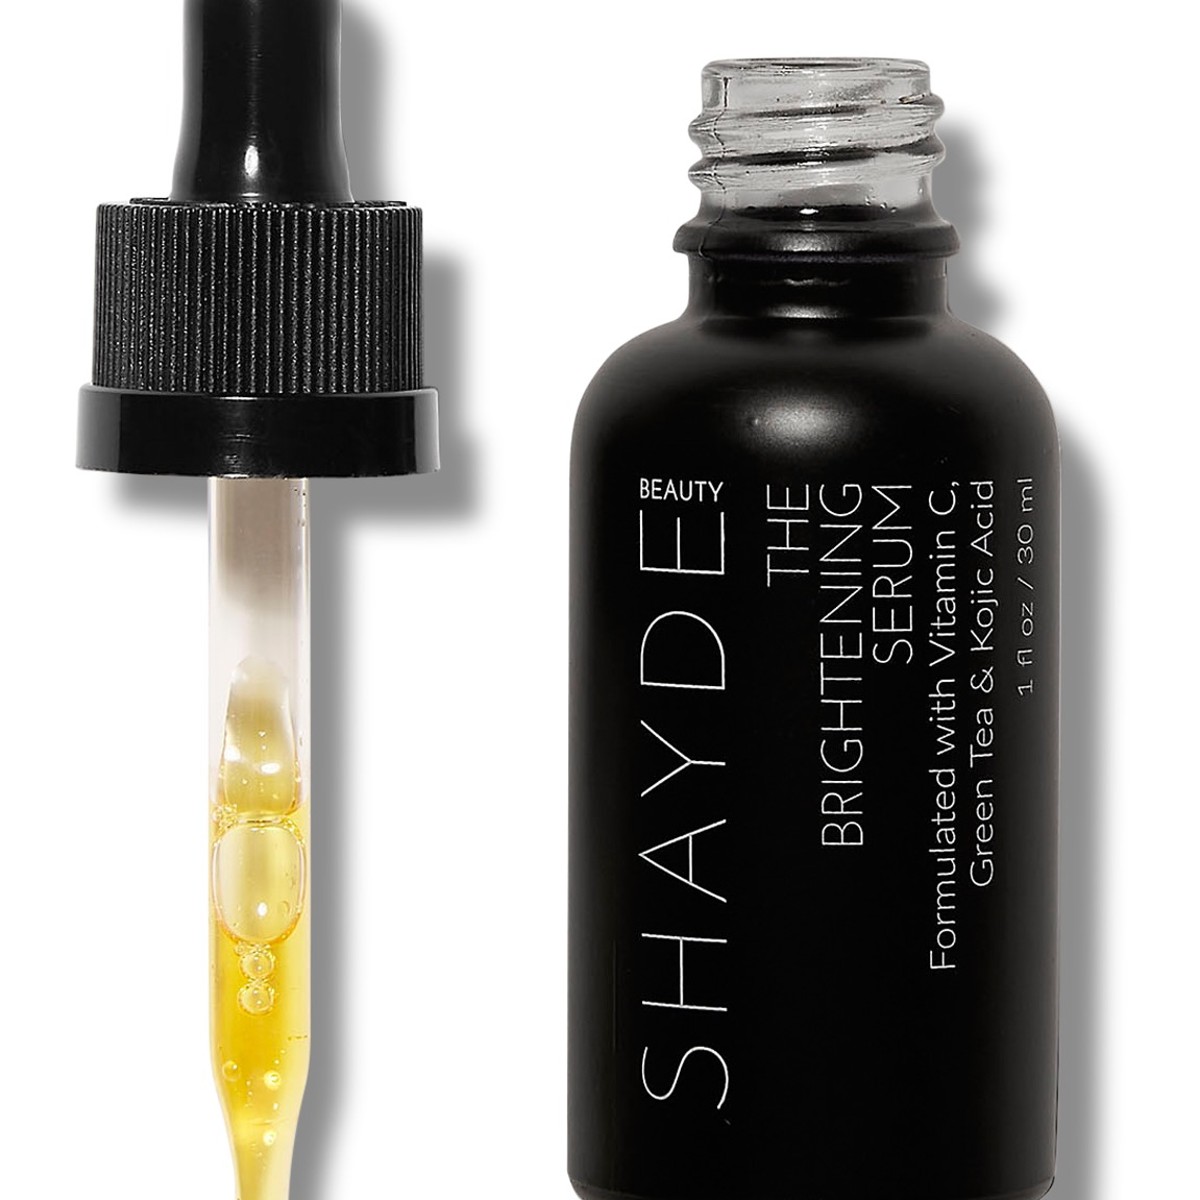 Blemish Control Spot Treatment - Natural Salicylic Acid Alternative (0.33  Fl. Oz.) by Sky Organics at the Vitamin Shoppe